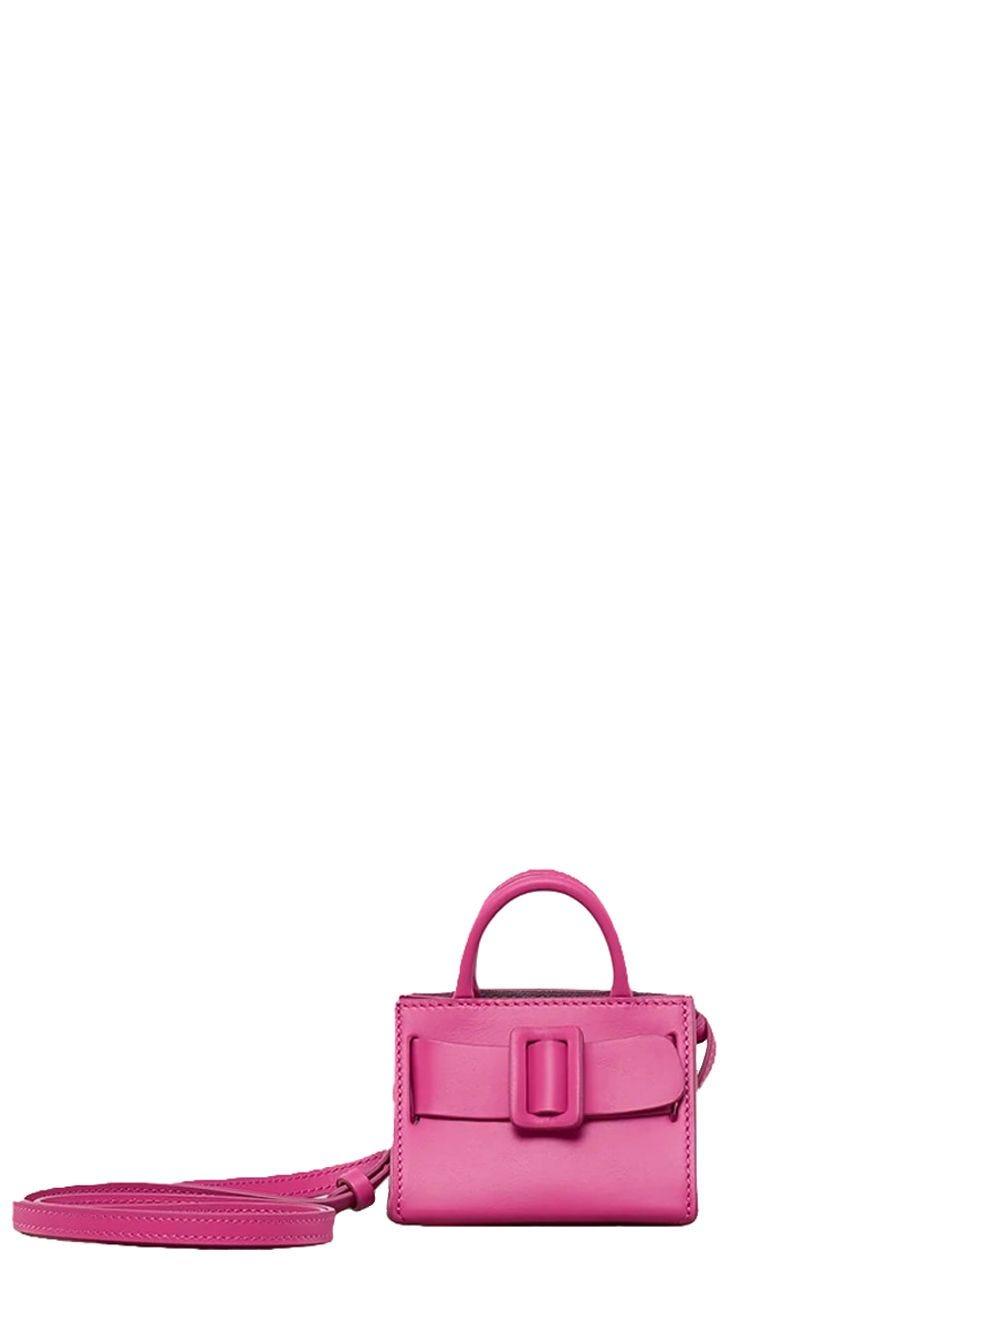 Boyy Fuchsia Bobby Charm Mini Bag in Pink